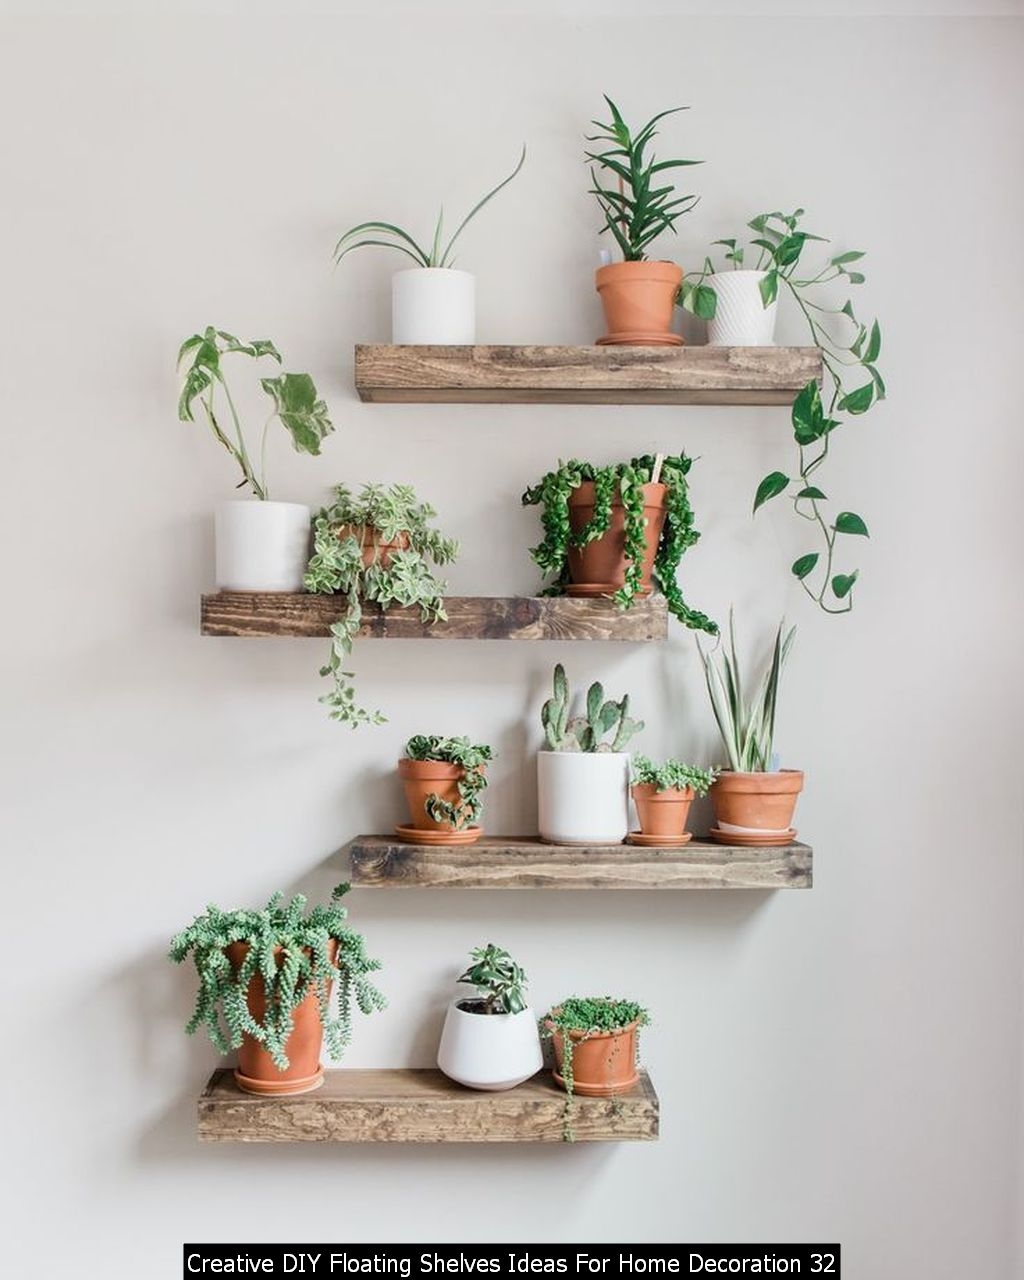 Creative DIY Floating Shelves Ideas For Home Decoration 32